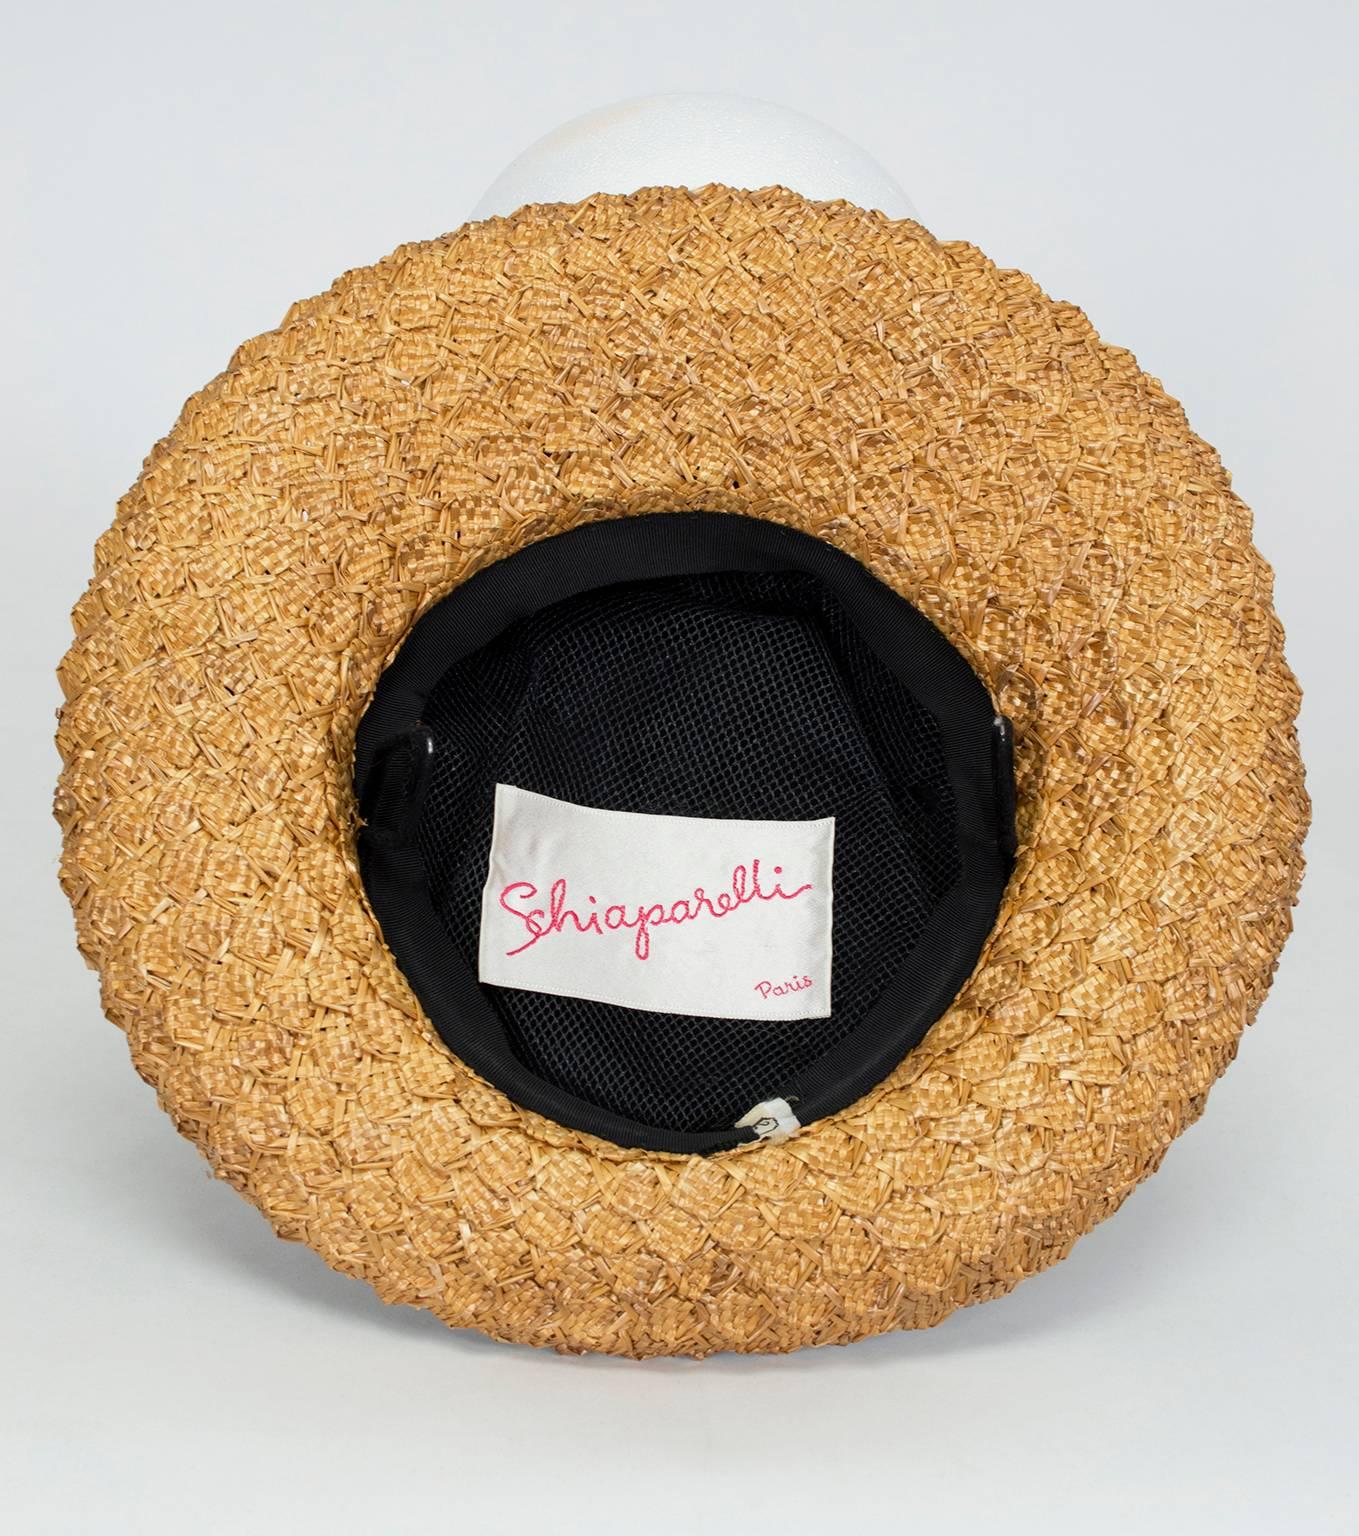 Gray Schiaparelli Paris Black Velvet and Straw Summer Boater Hat - Adjustable, 1950s